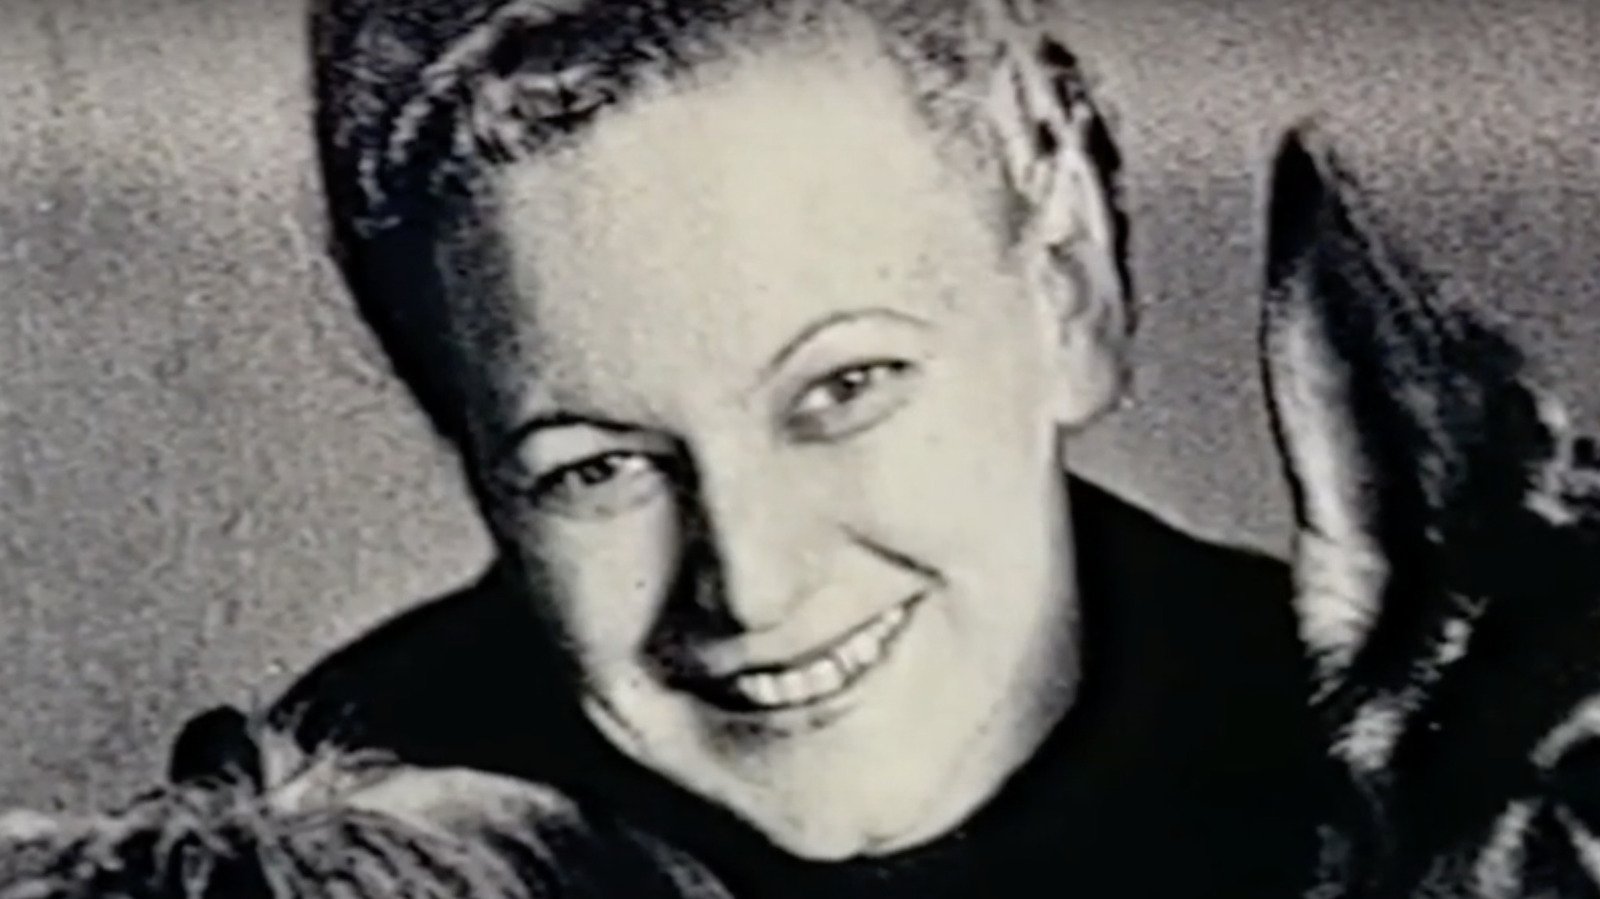 A Look Back At The Life Of Emilie Schindler, The Wife Of Oskar Schindler